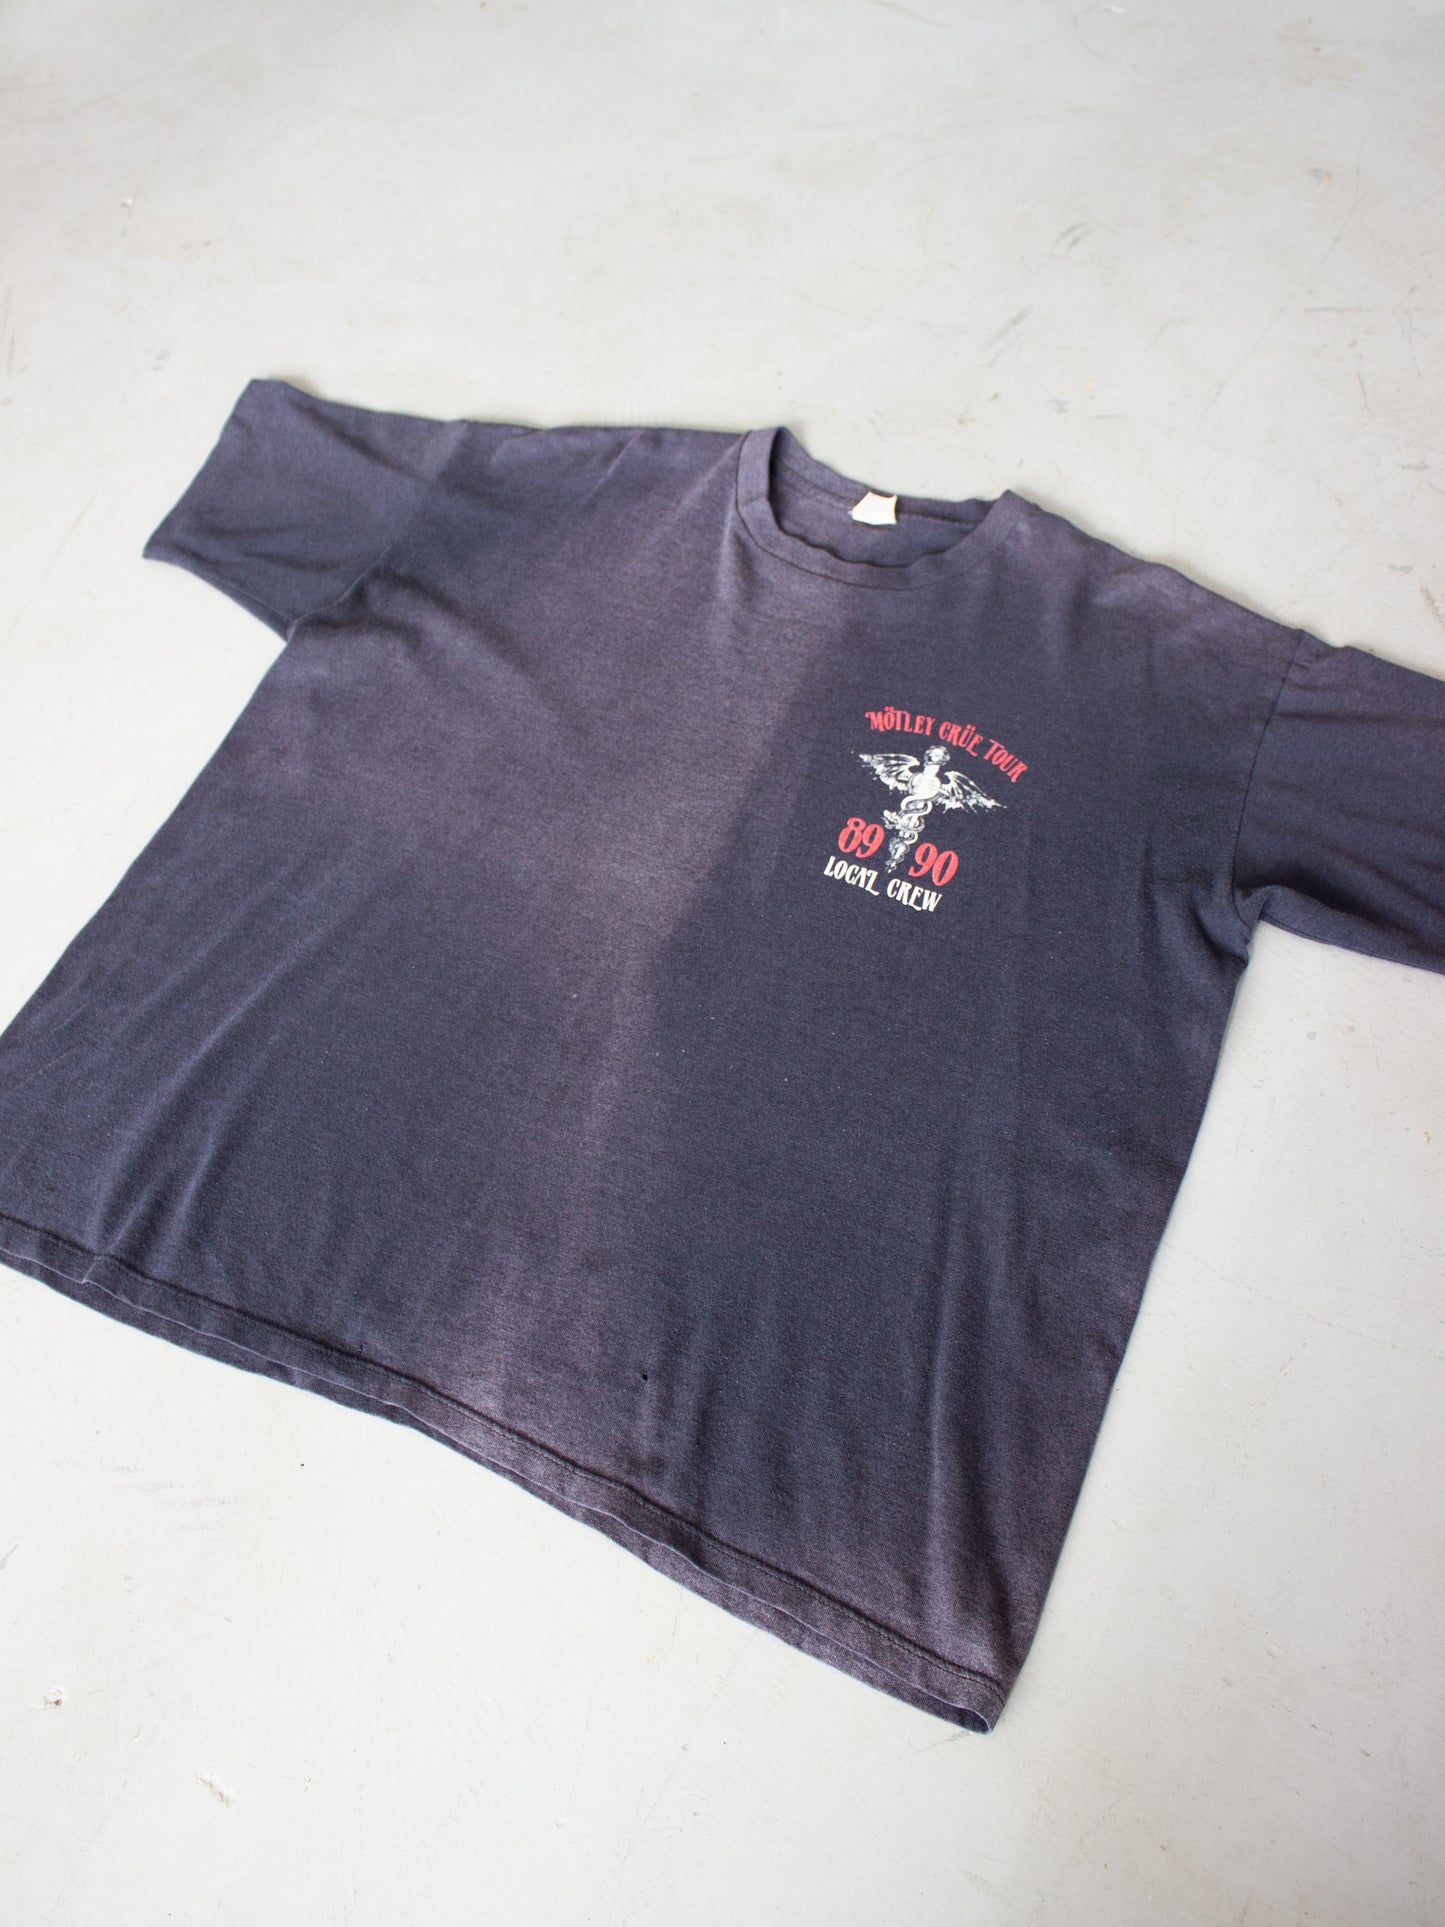 1989 1990 Motley Crue Tour Local Crew Black T-shirt (Large- XLarge)